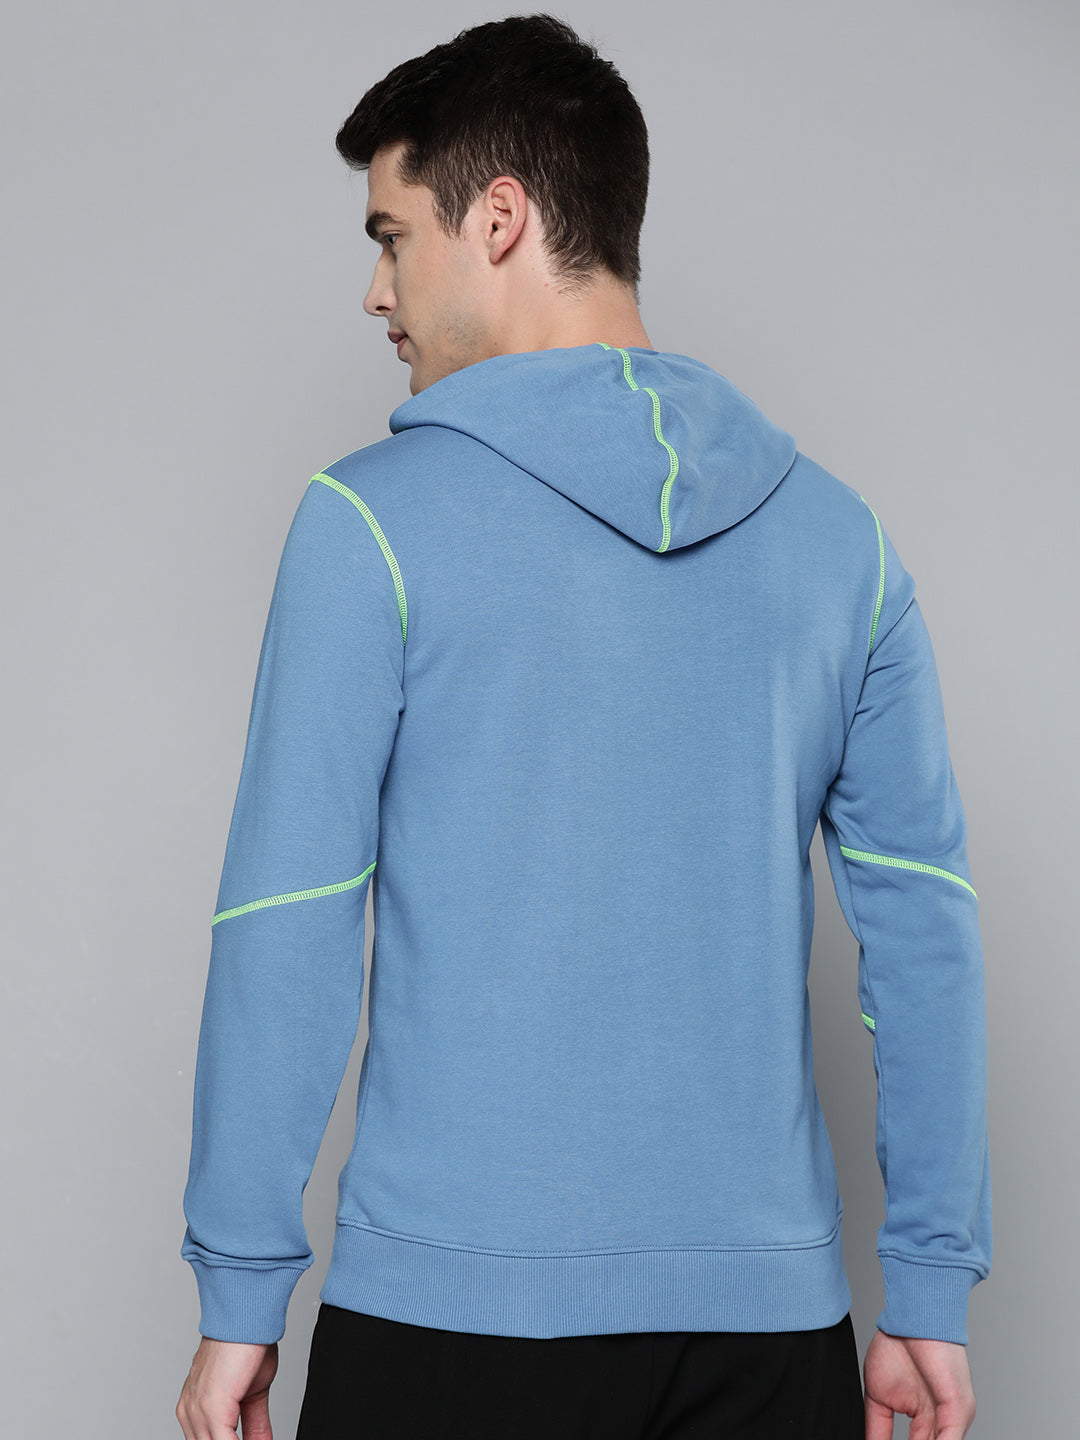 Alcis Men Blue Solid Hooded Sweatshirt